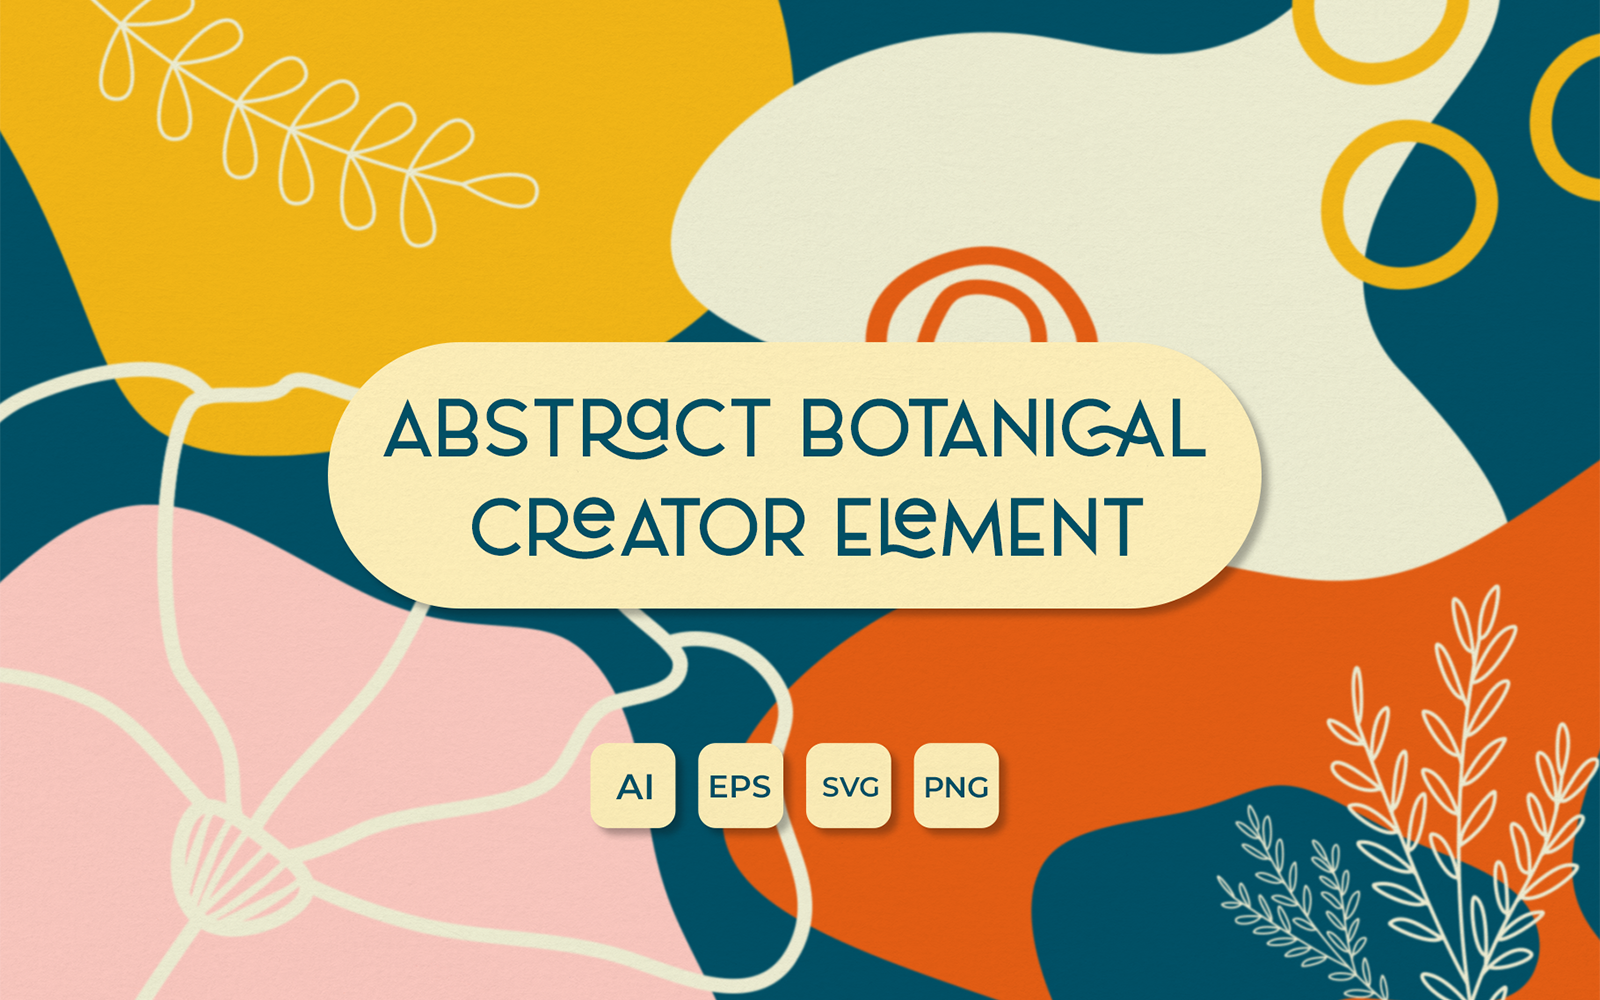 Abstract Botanical Creator Element - Illustration